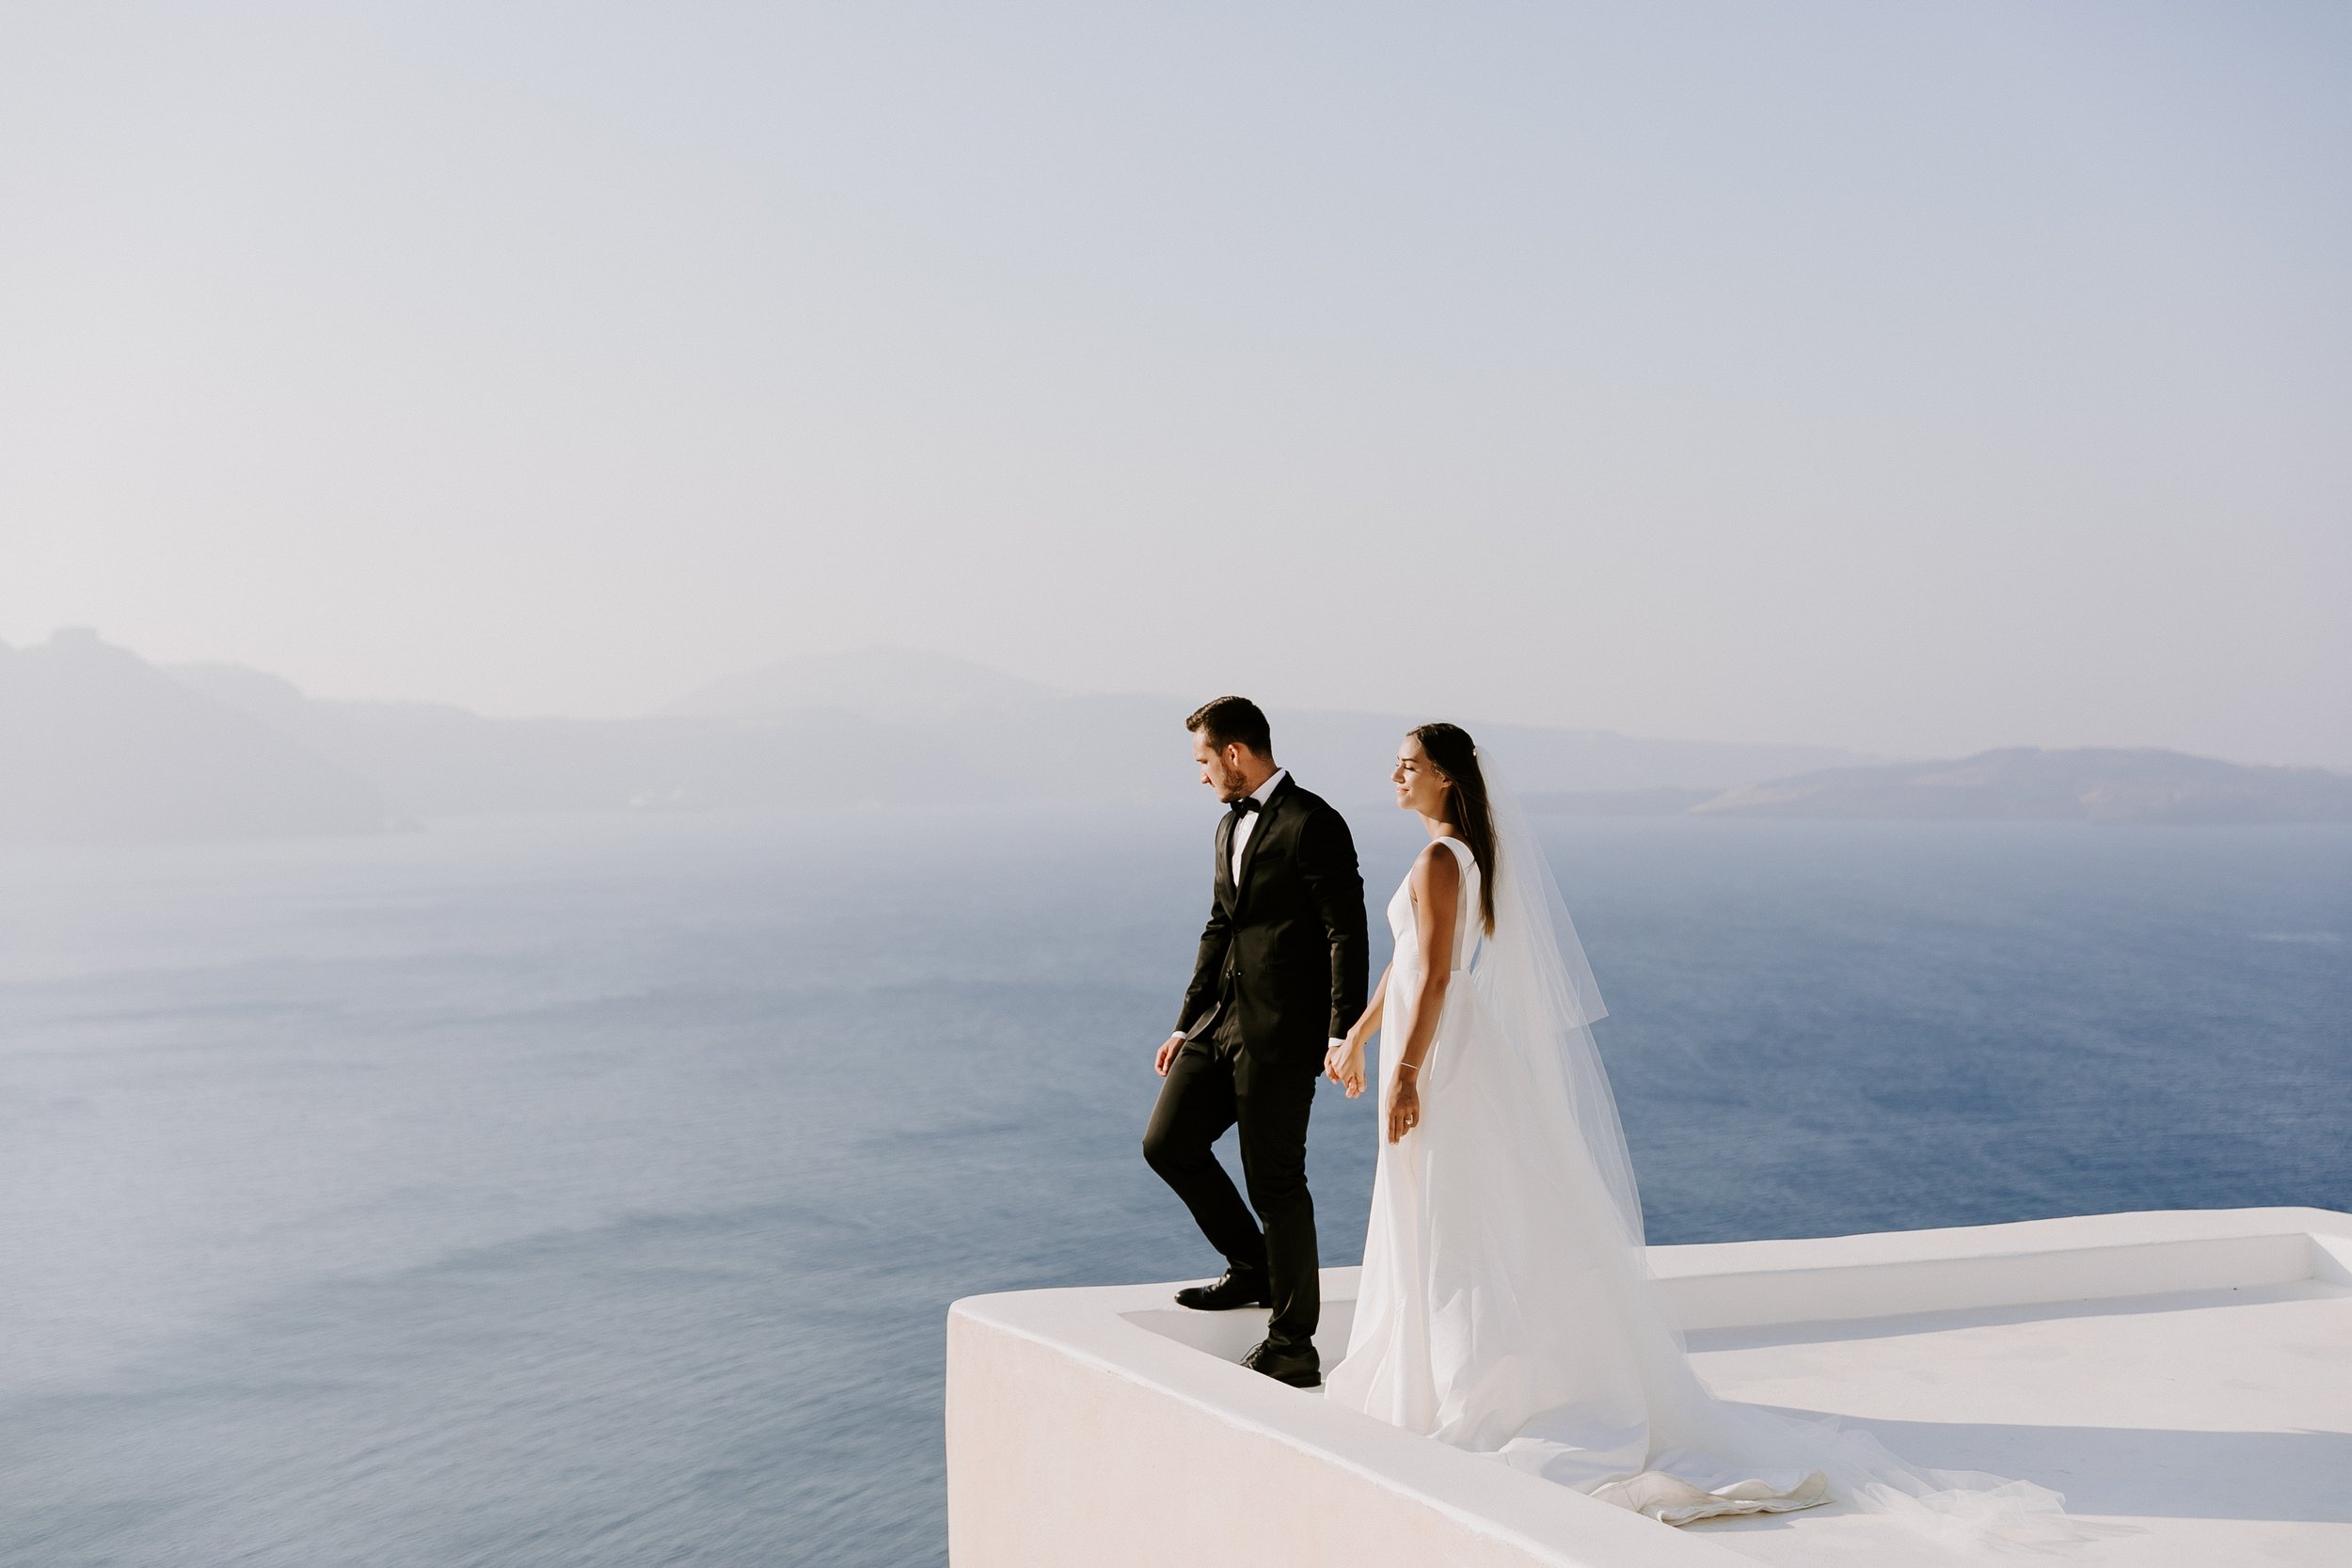 Film House Weddings 5 Tips For Hiring a Wedding Photography | Luxury ...